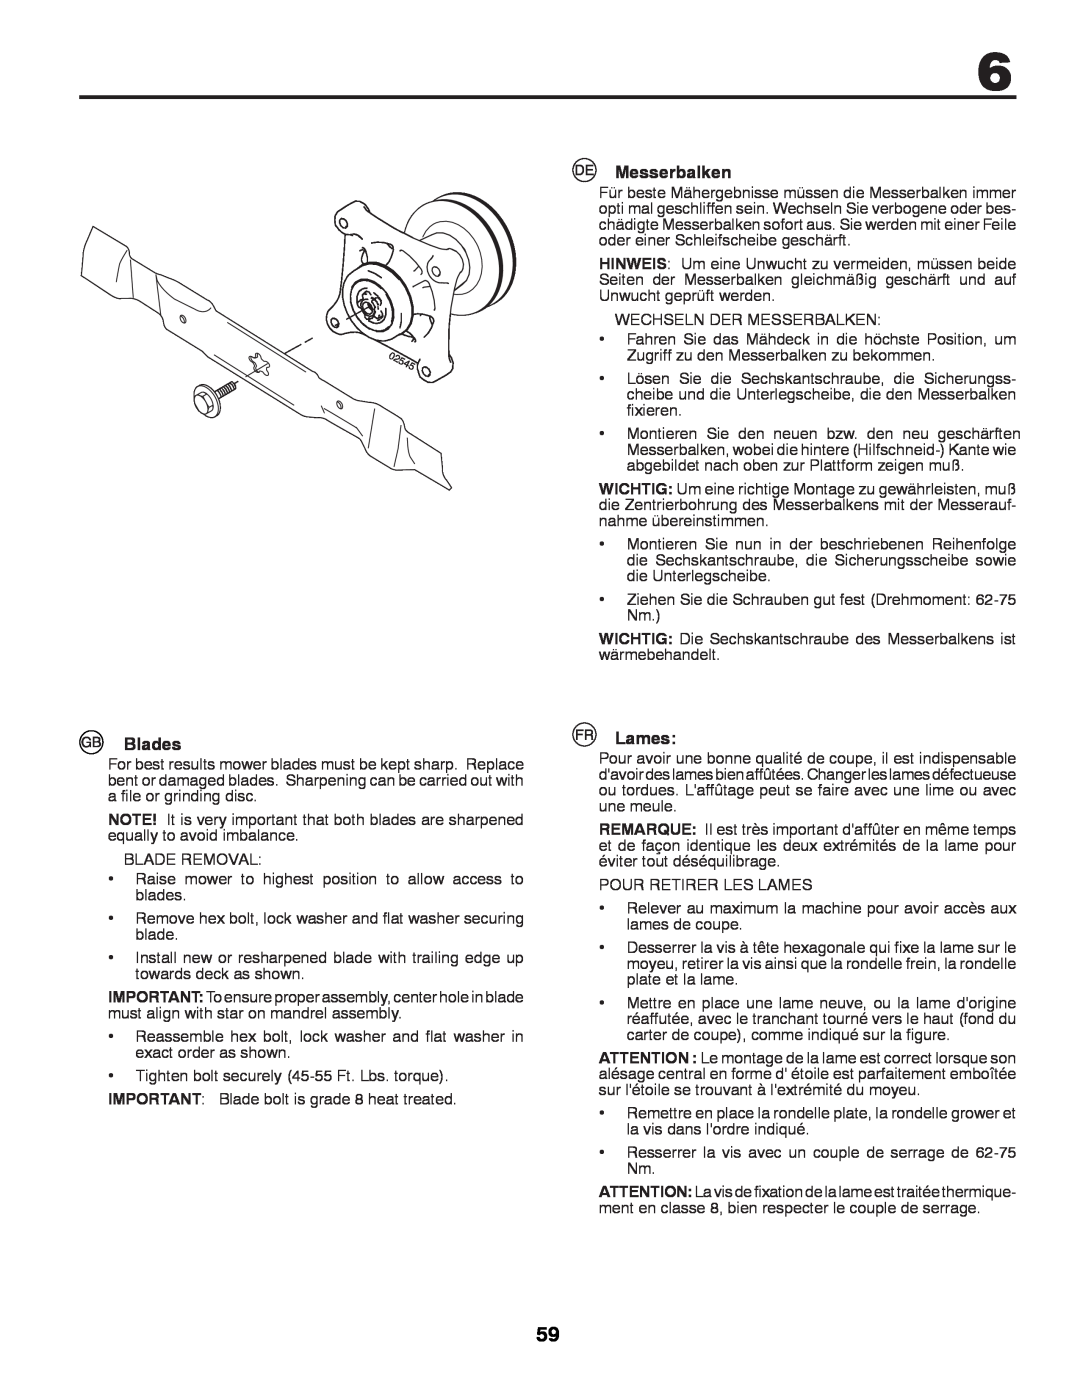 Husqvarna GTH260TWIN instruction manual Blades, Messerbalken, Lames 